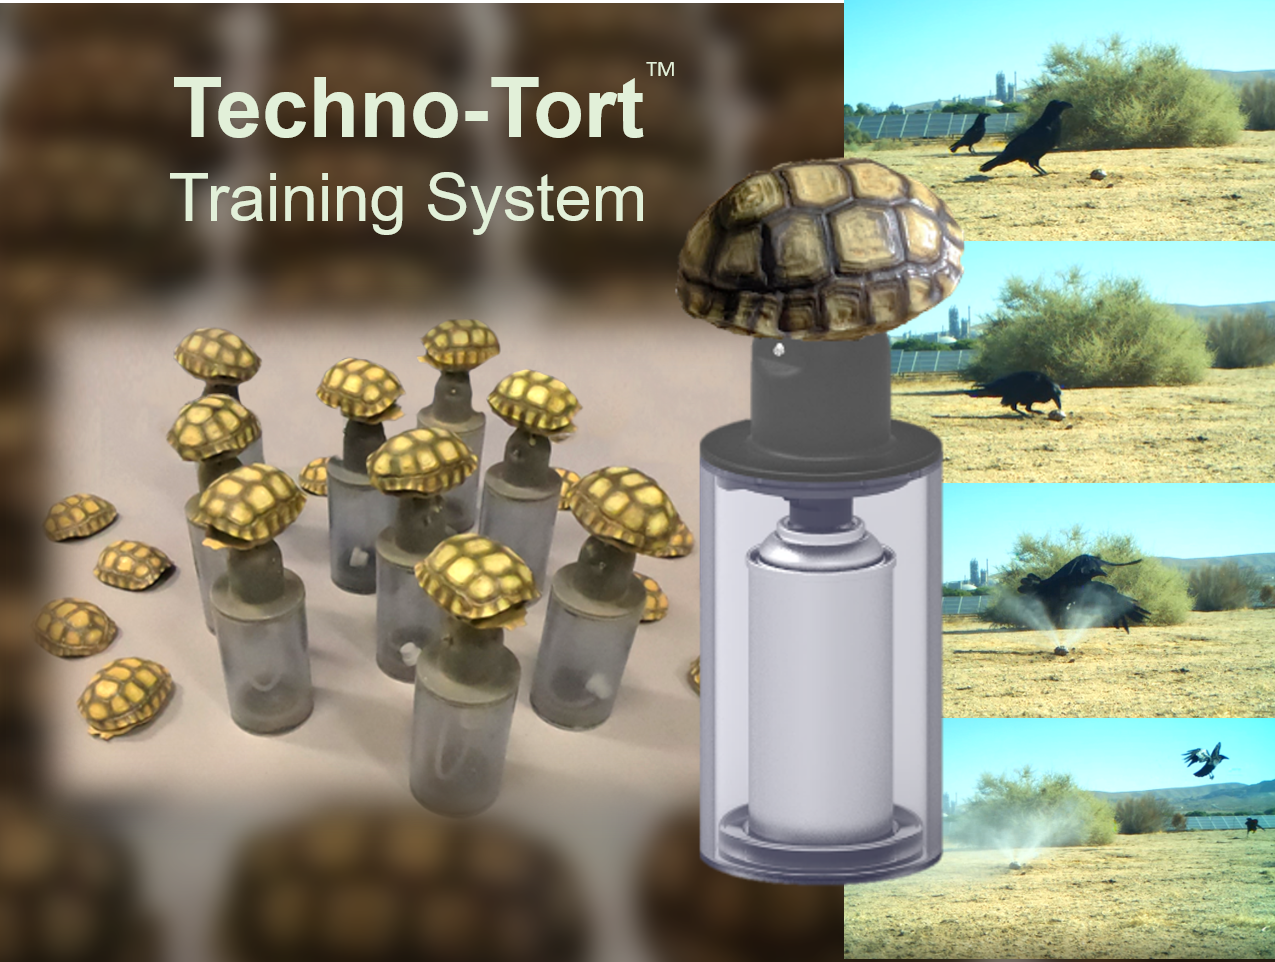 CRG's Techo-Tort training system